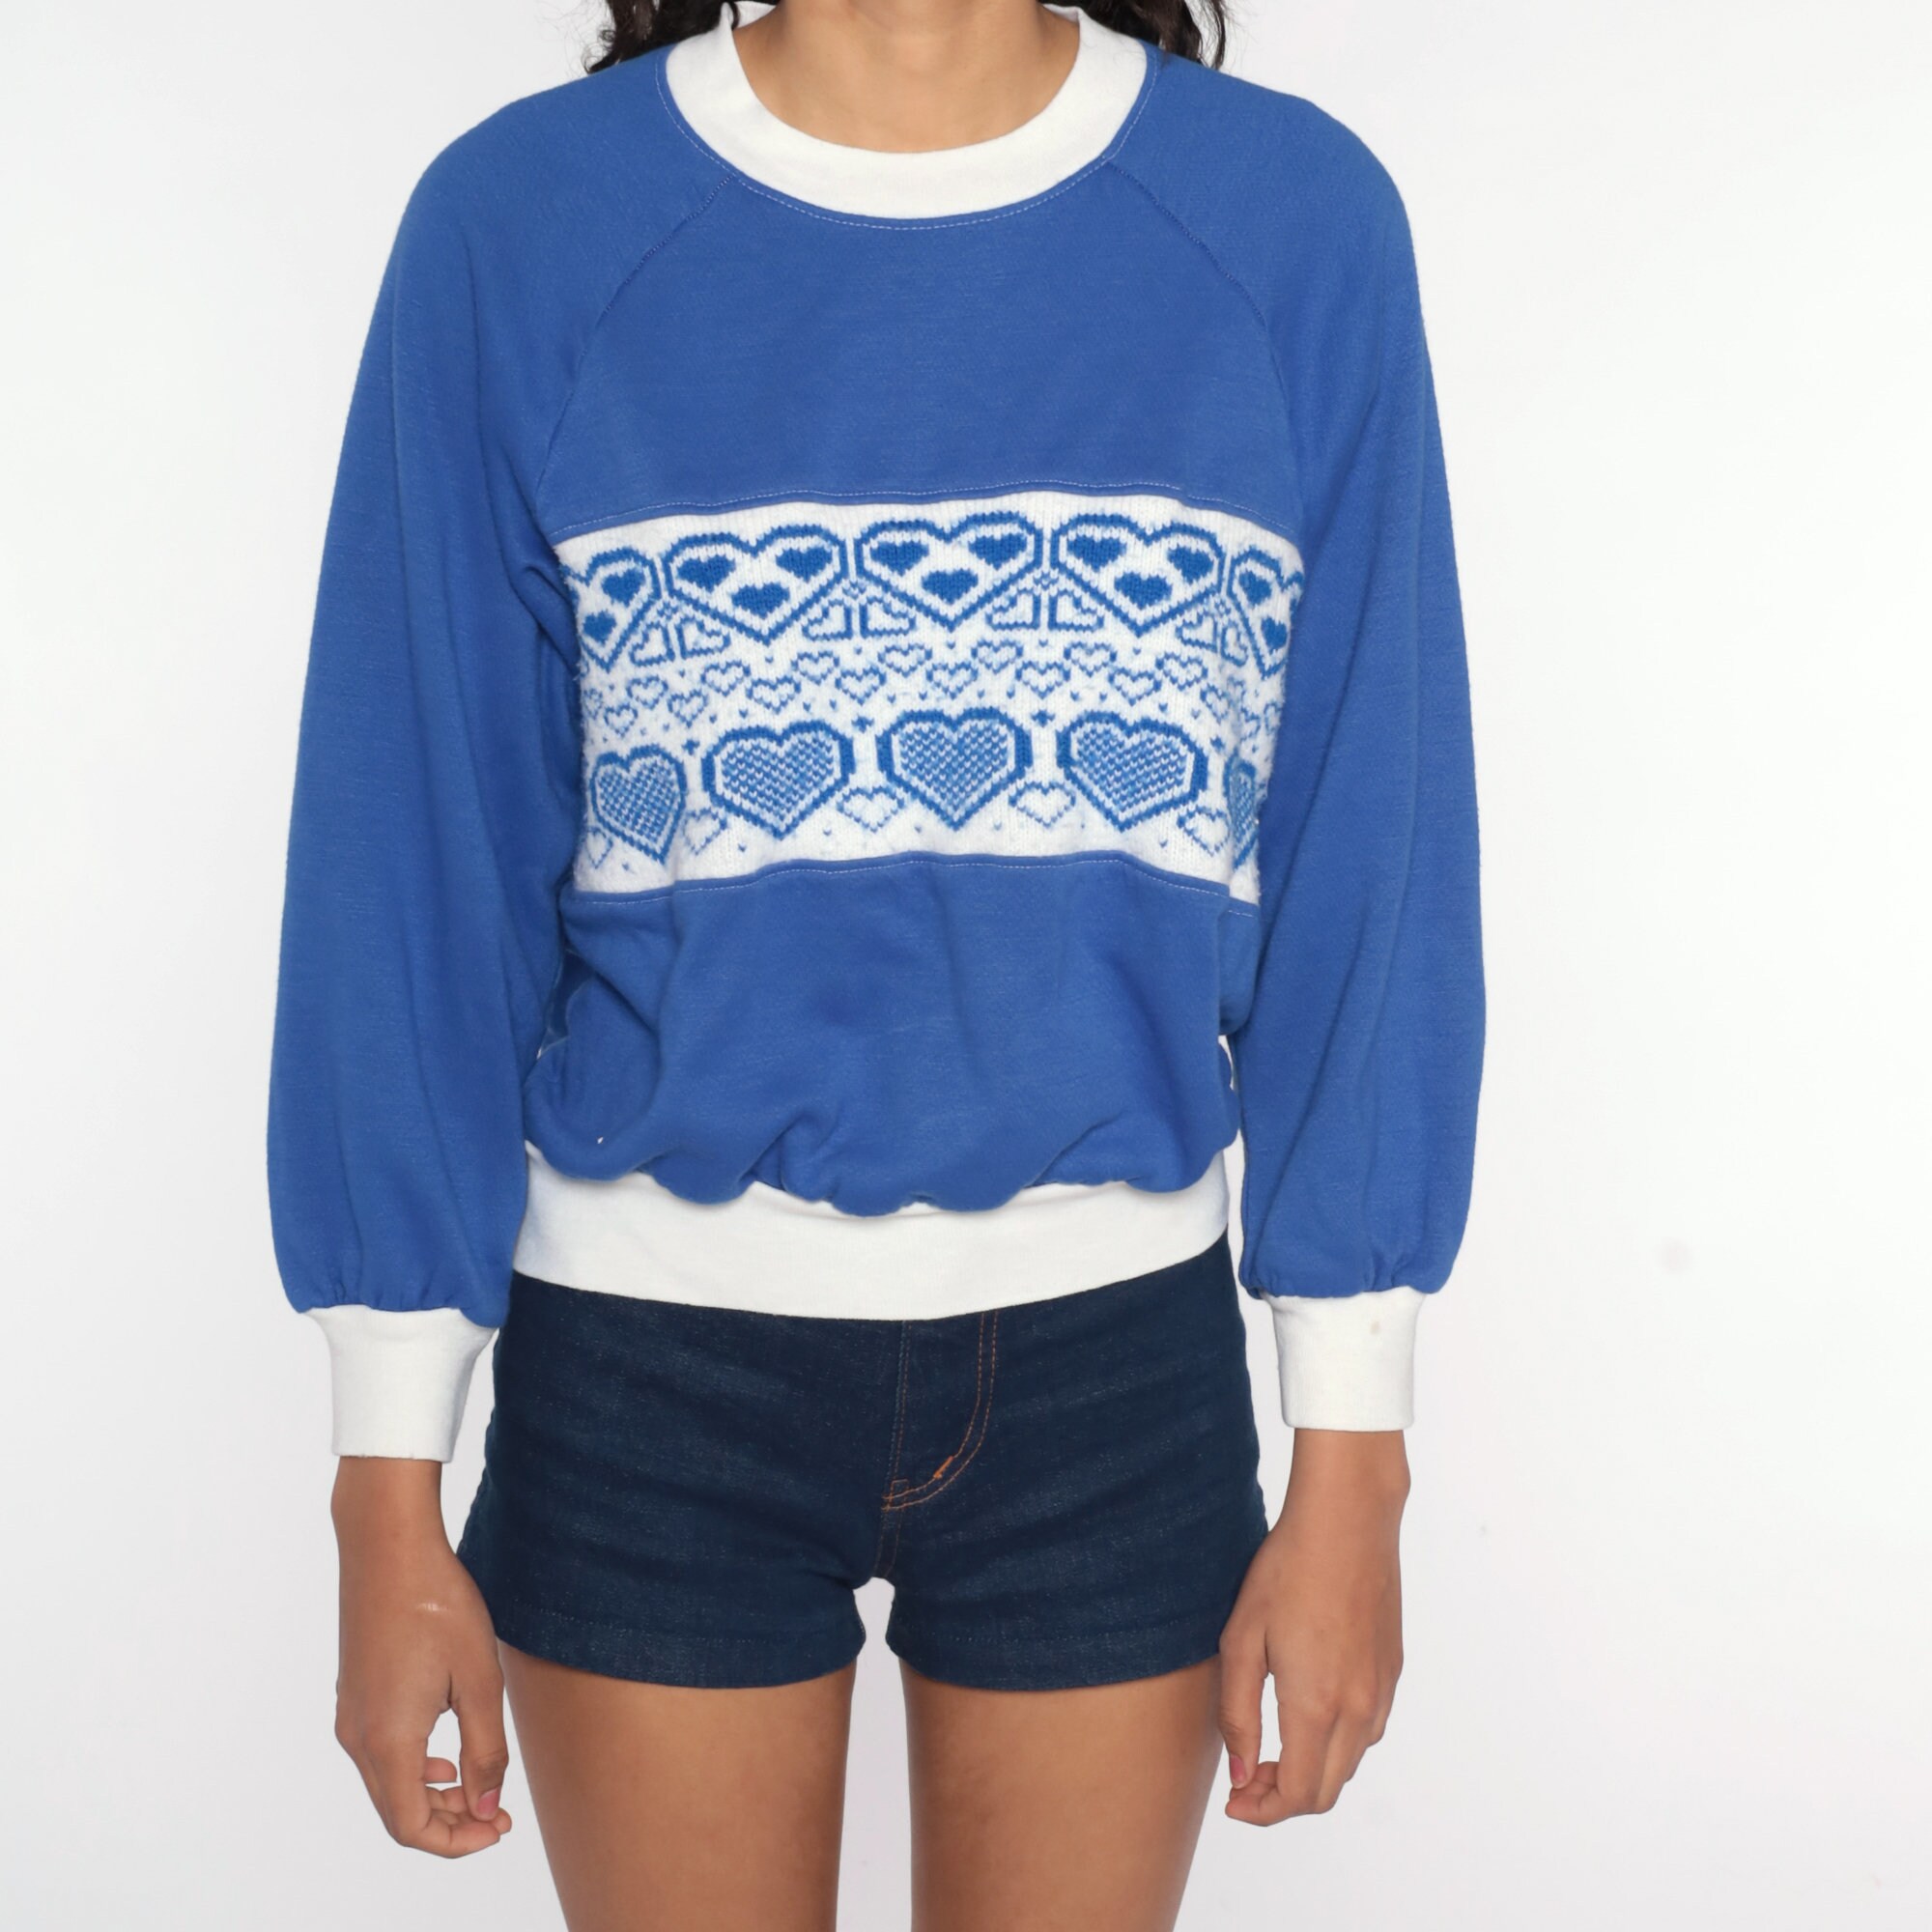 Heart Sweatshirt Blue Sweater 80s Novelty Slouchy Kitsch Pullover ...